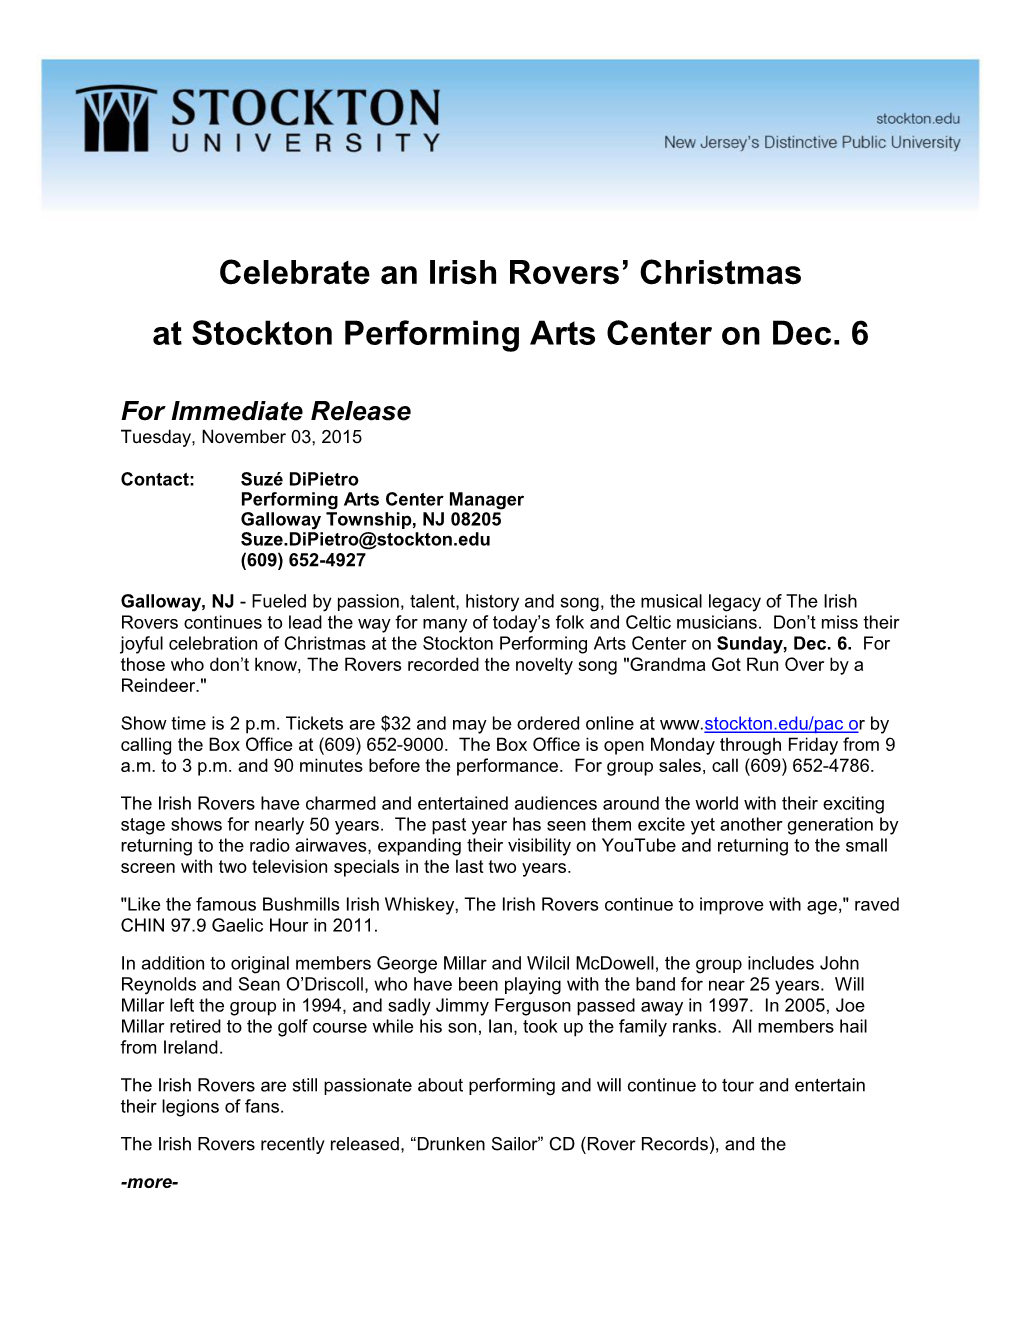 Celebrate an Irish Rovers' Christmas at Stockton Performing Arts Center